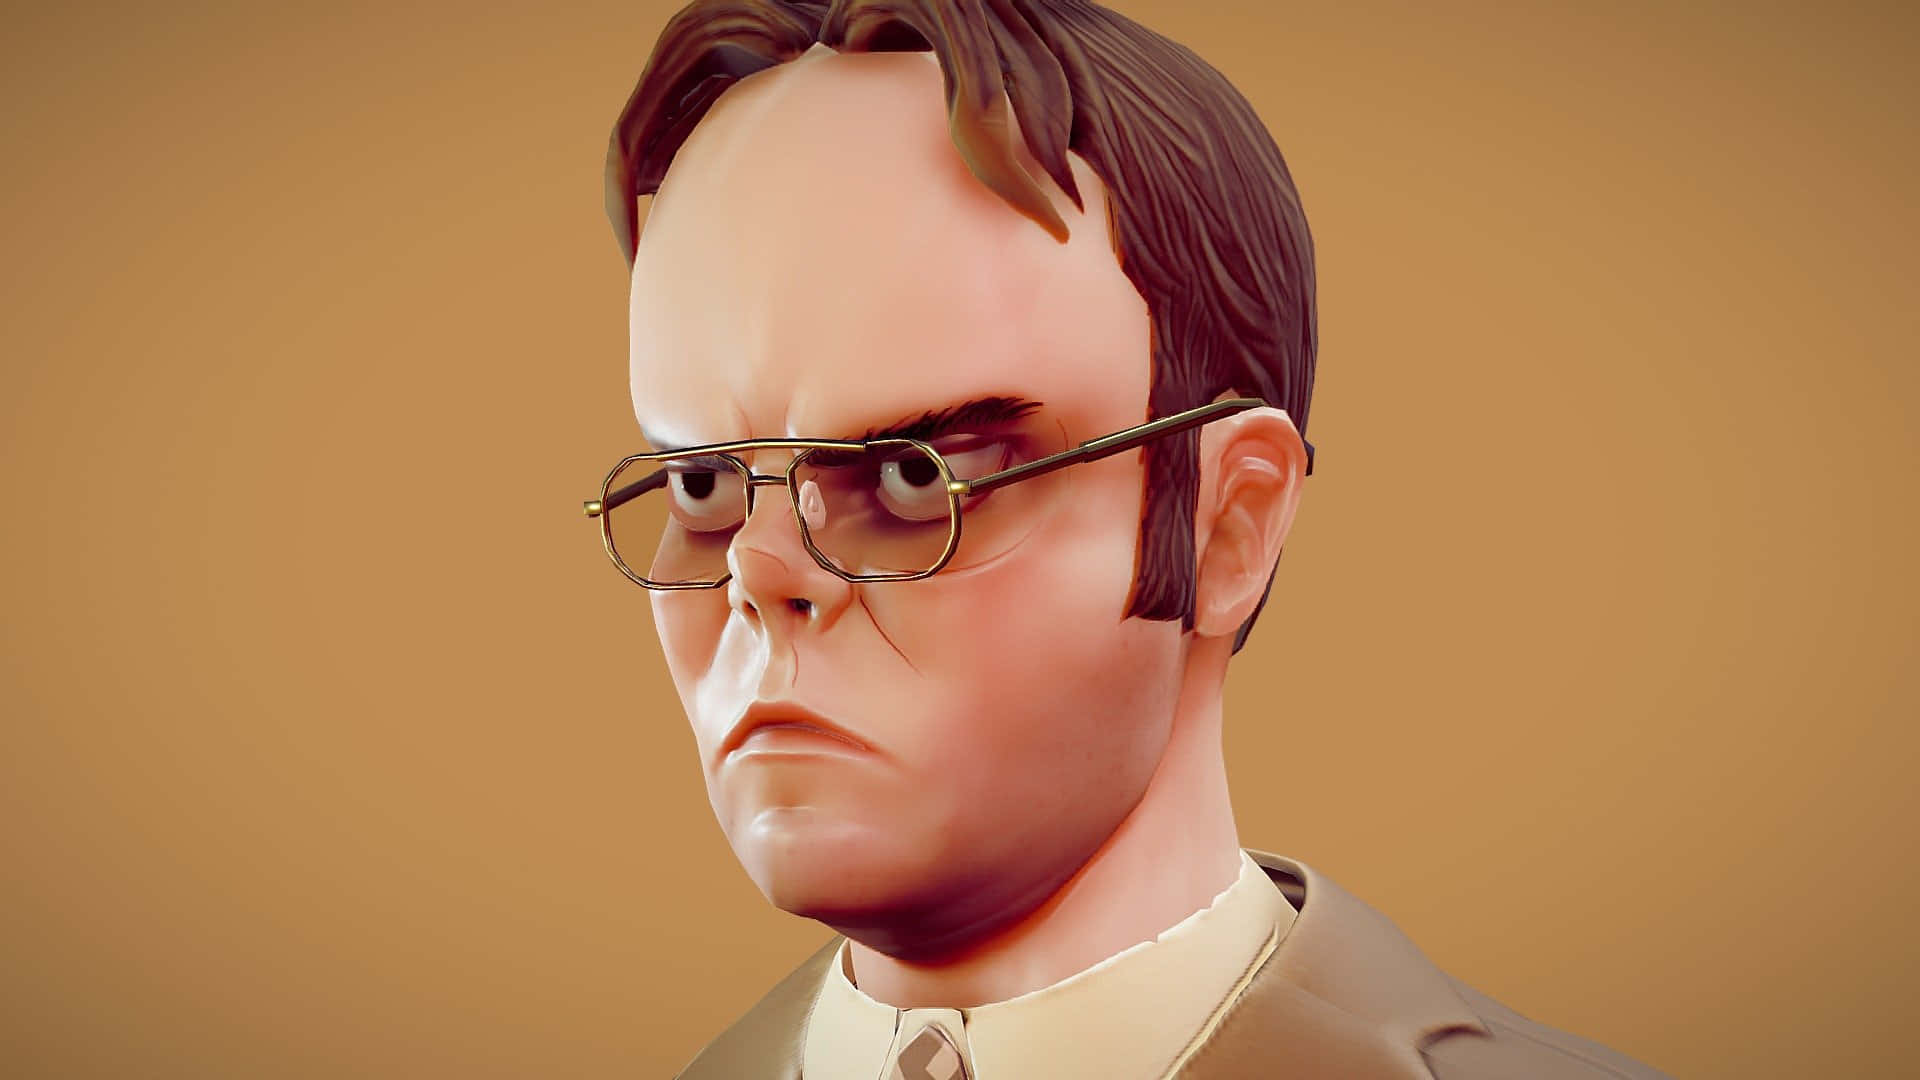 Dwightschrute - L'eroe Di The Office Sfondo